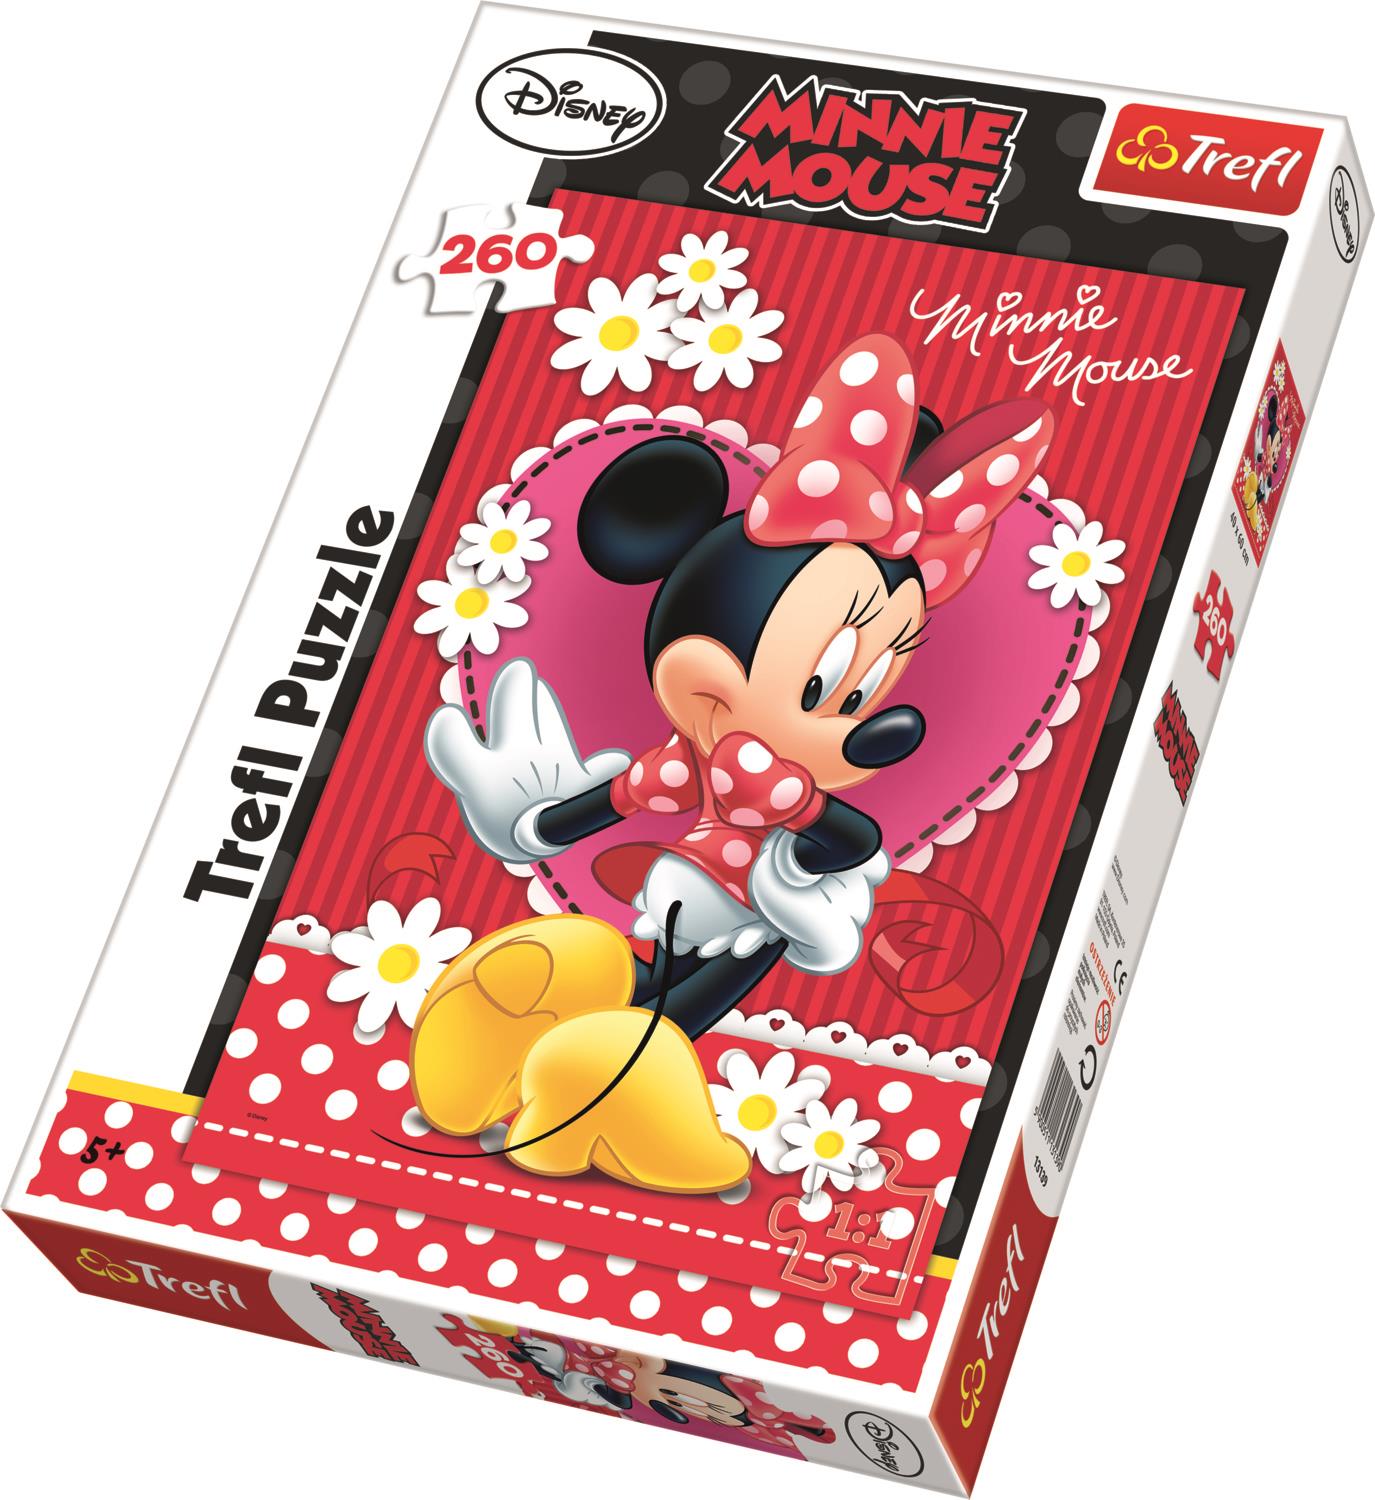 Trefl Çocuk Puzzle 13139 Minnie Mouse, Disney 260 Parça Puzzle